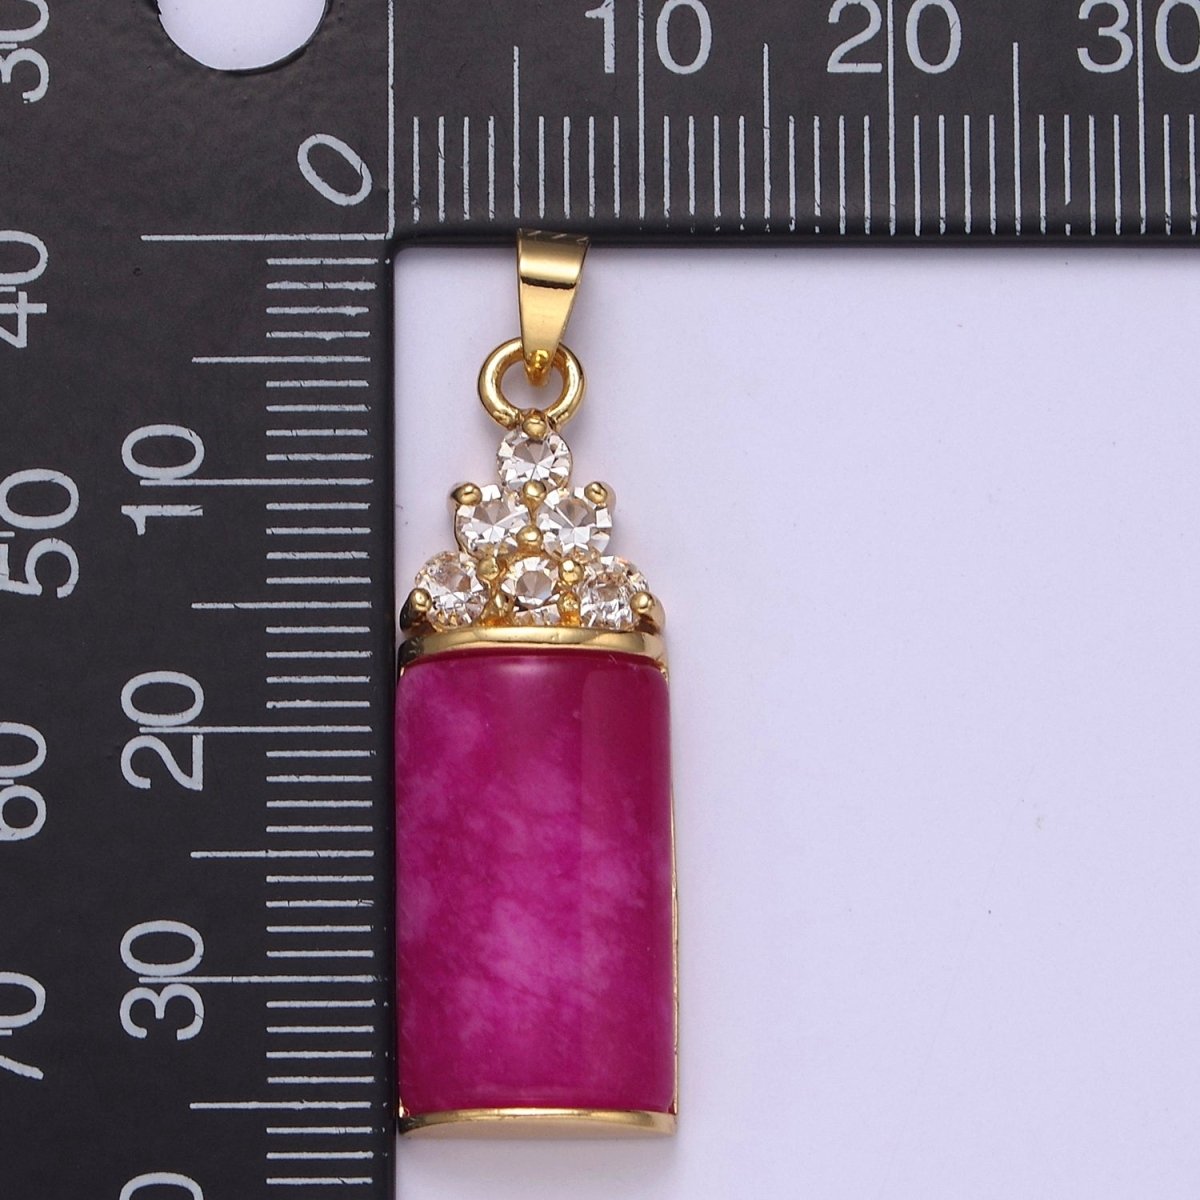 Purple Jade Pendant Vintage Design Micro Pave Silver Drop Charm for Necklace W-634 W-635 - DLUXCA